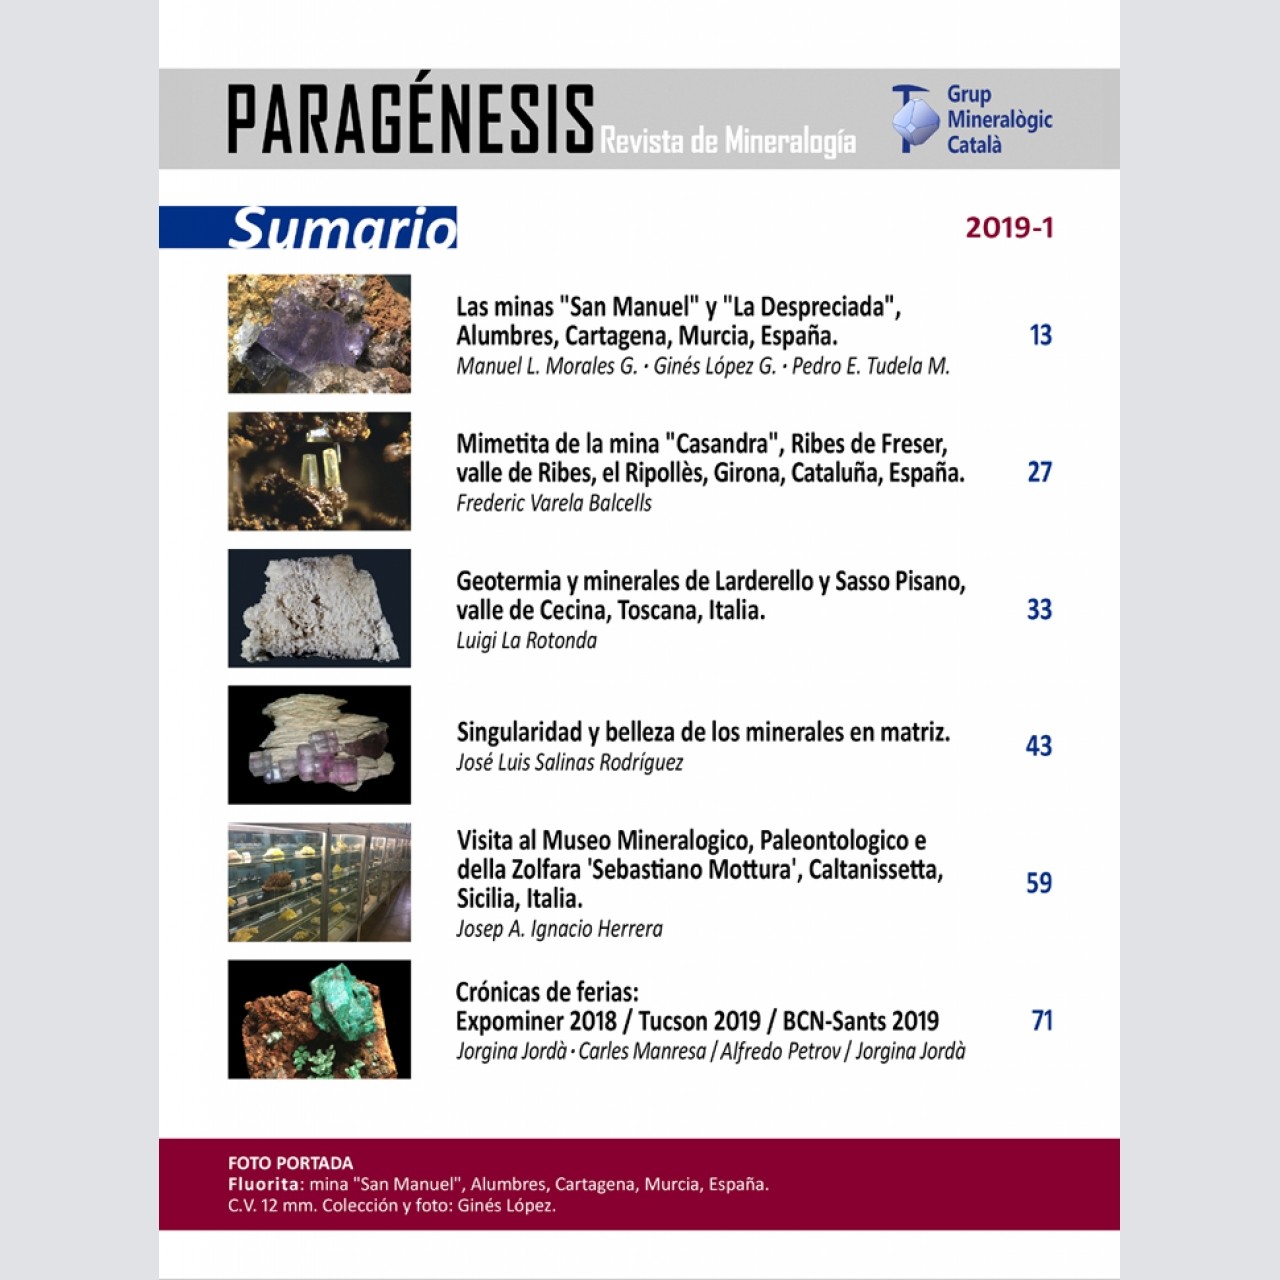 Paragénesis. Revista de Mineralogía (2019-1)